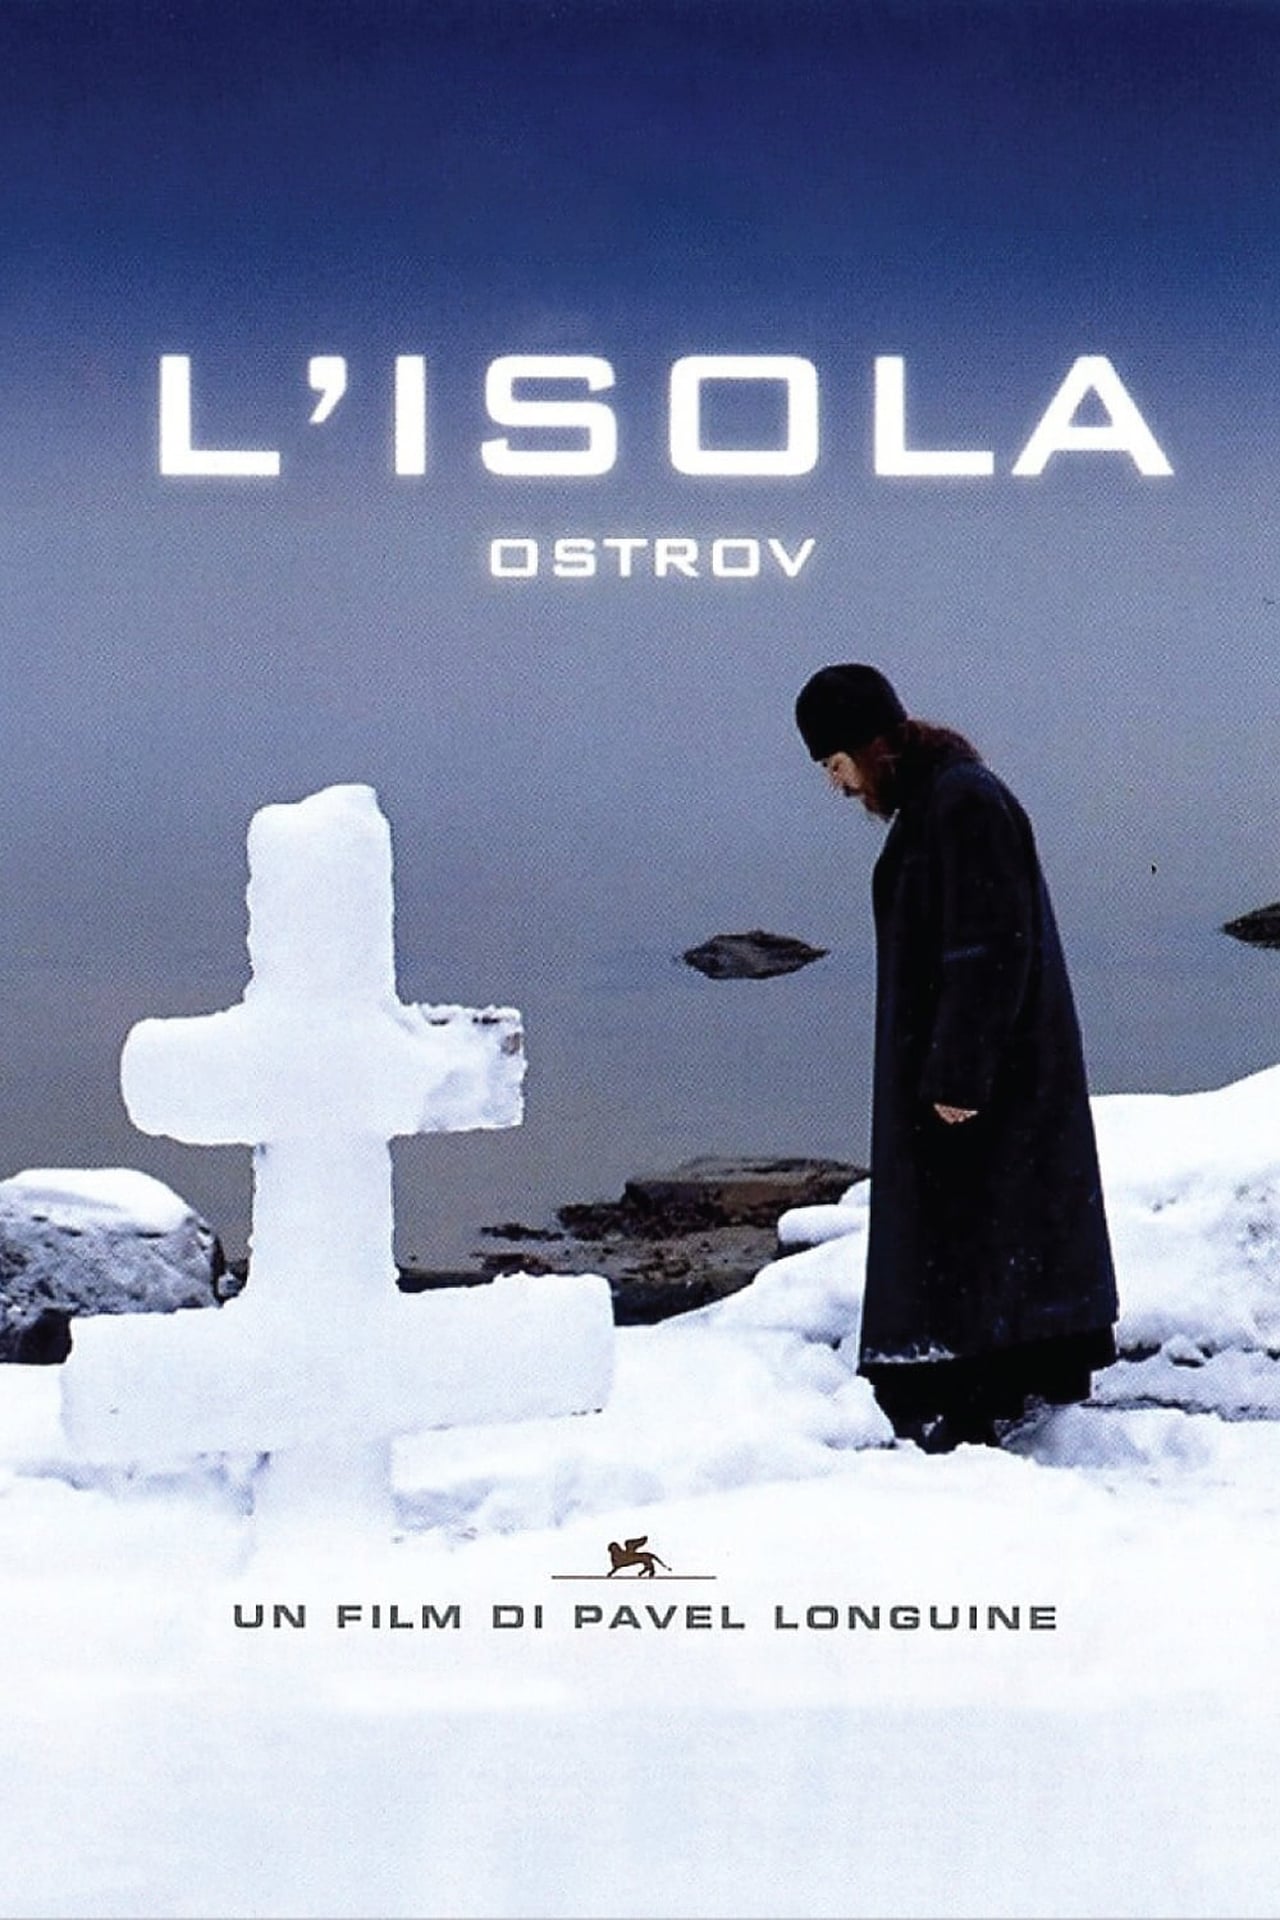 L’isola – Ostrov [HD] (2006)